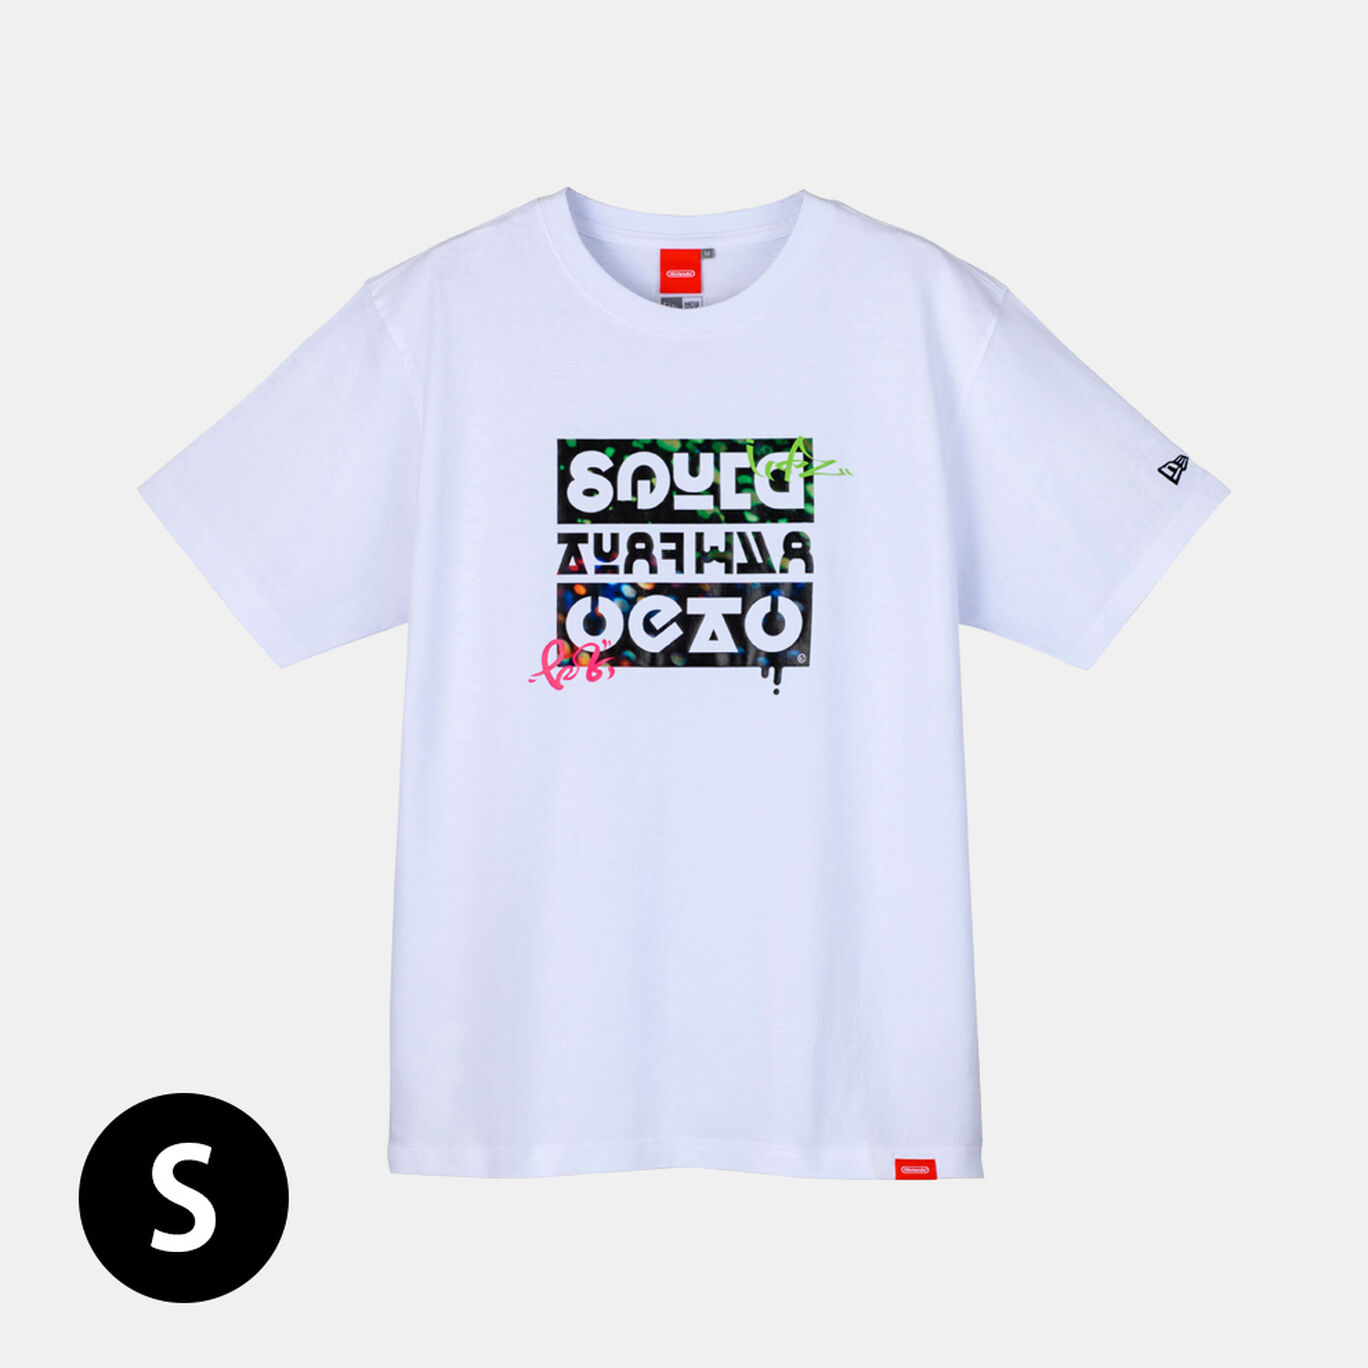 Tシャツ白 S SQUID or OCTO Splatoon【Nintendo TOKYO取り扱い商品】